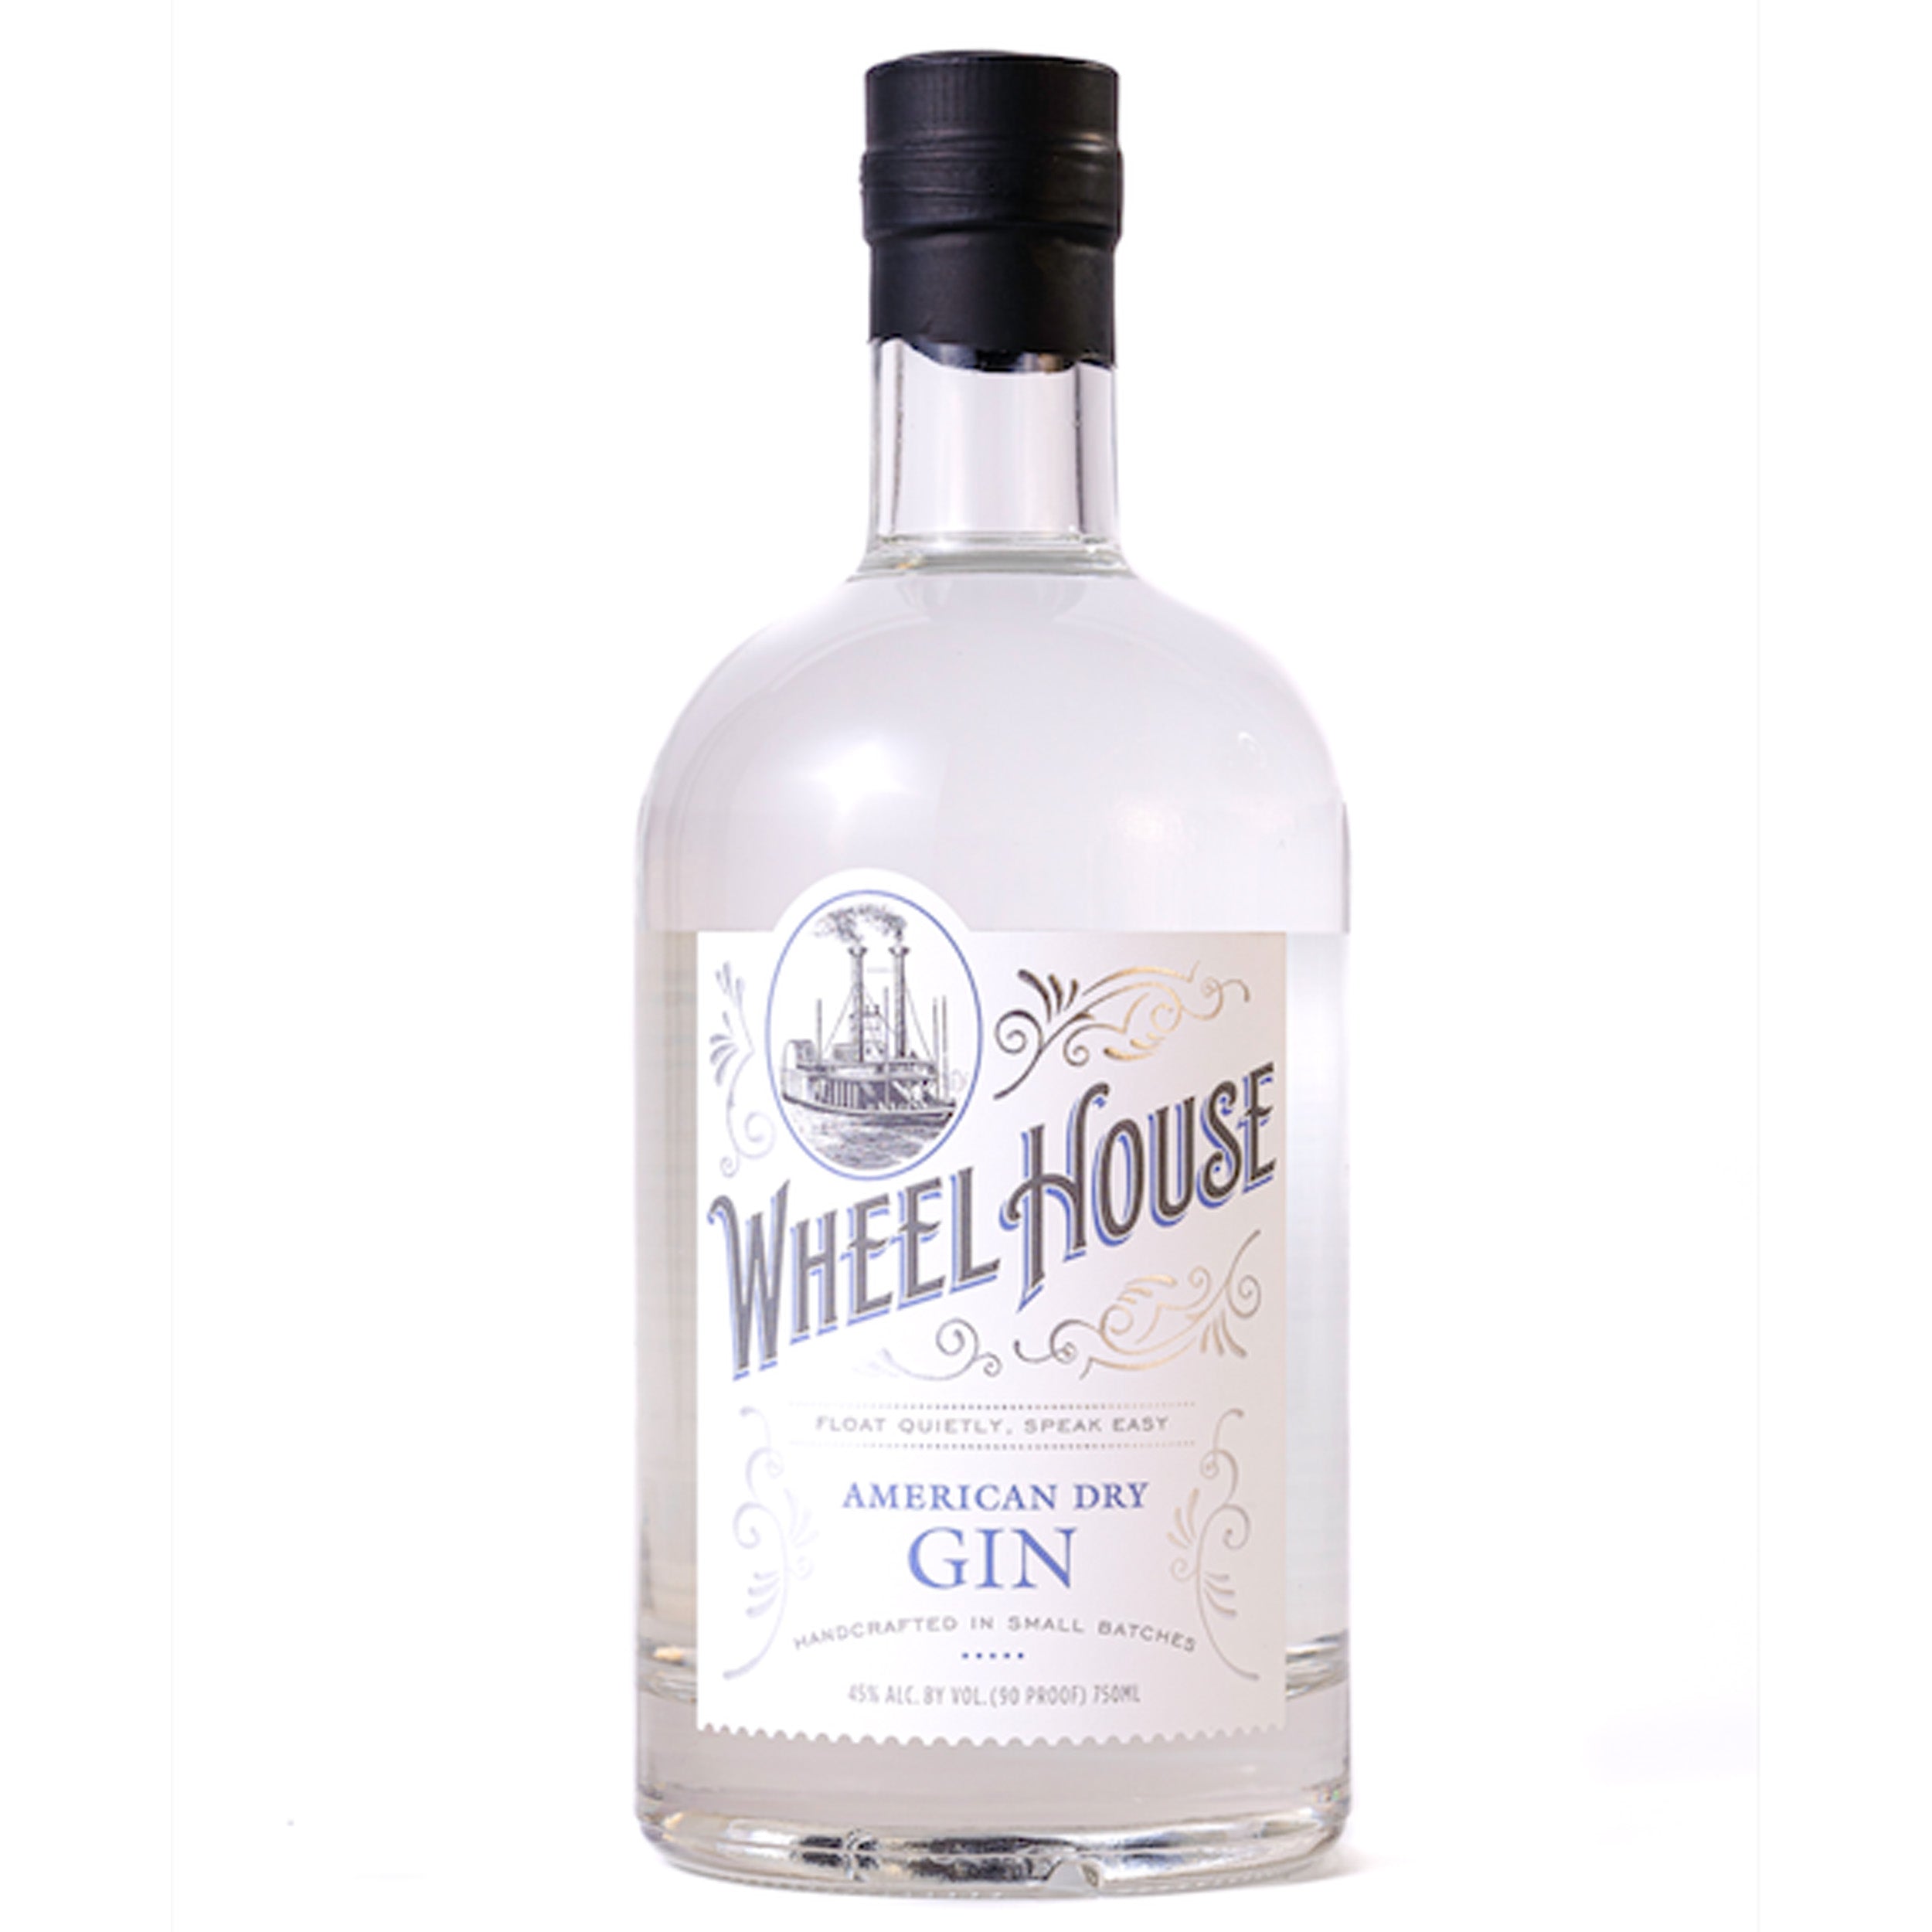 Wheel House American Dry Gin